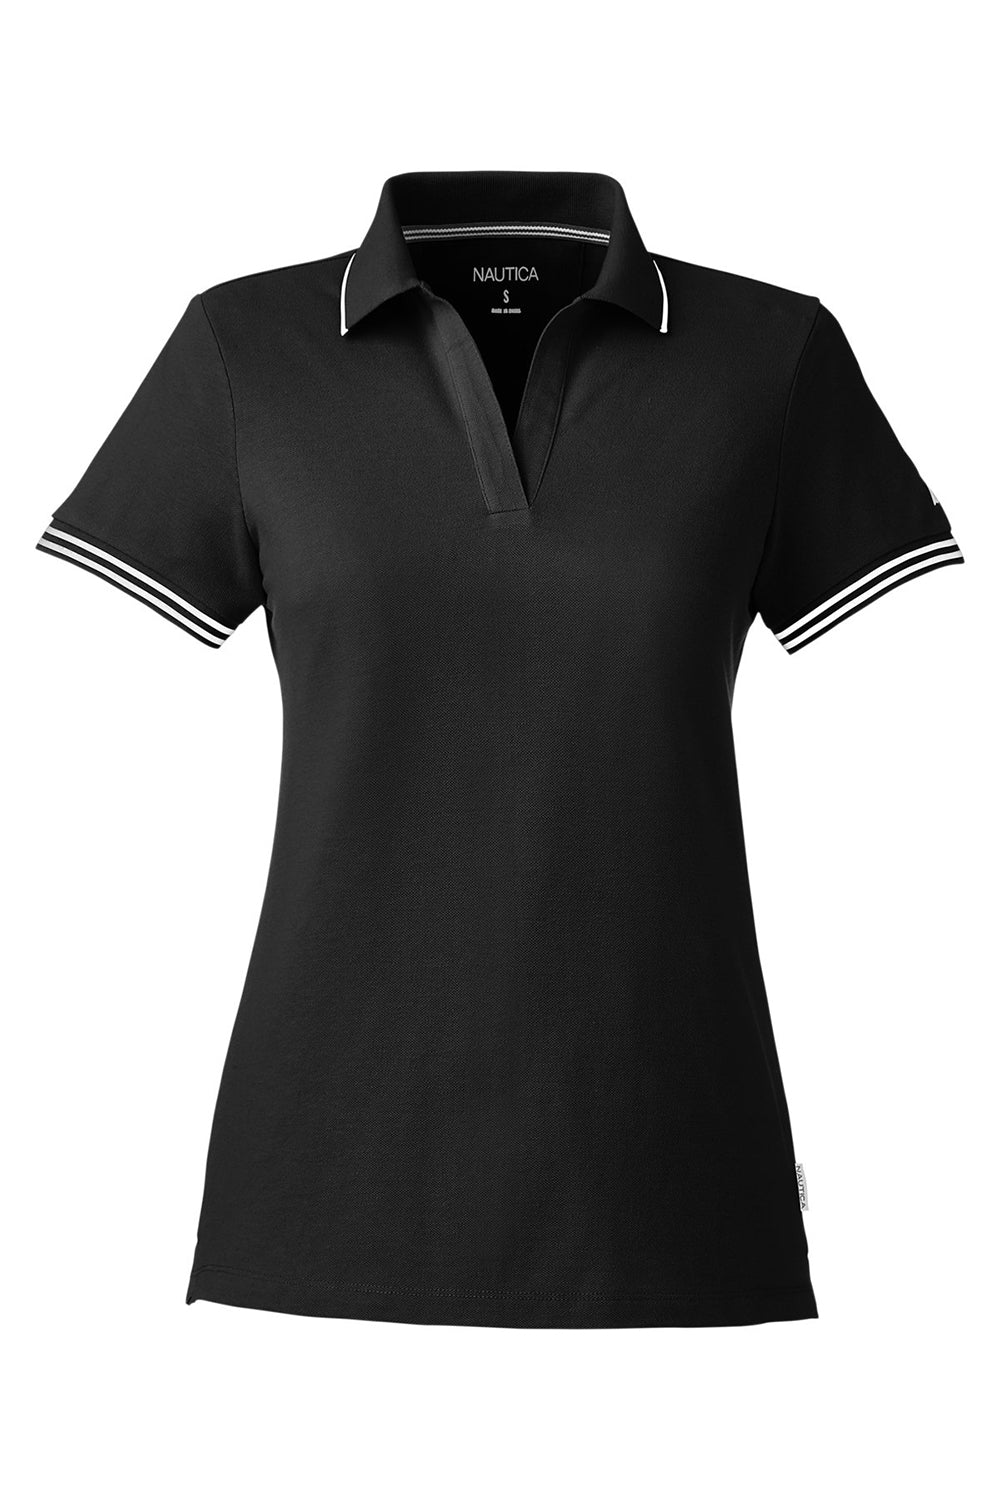 Nautica N17168 Womens Desk Short Sleeve Polo Shirt Black/White Flat Front